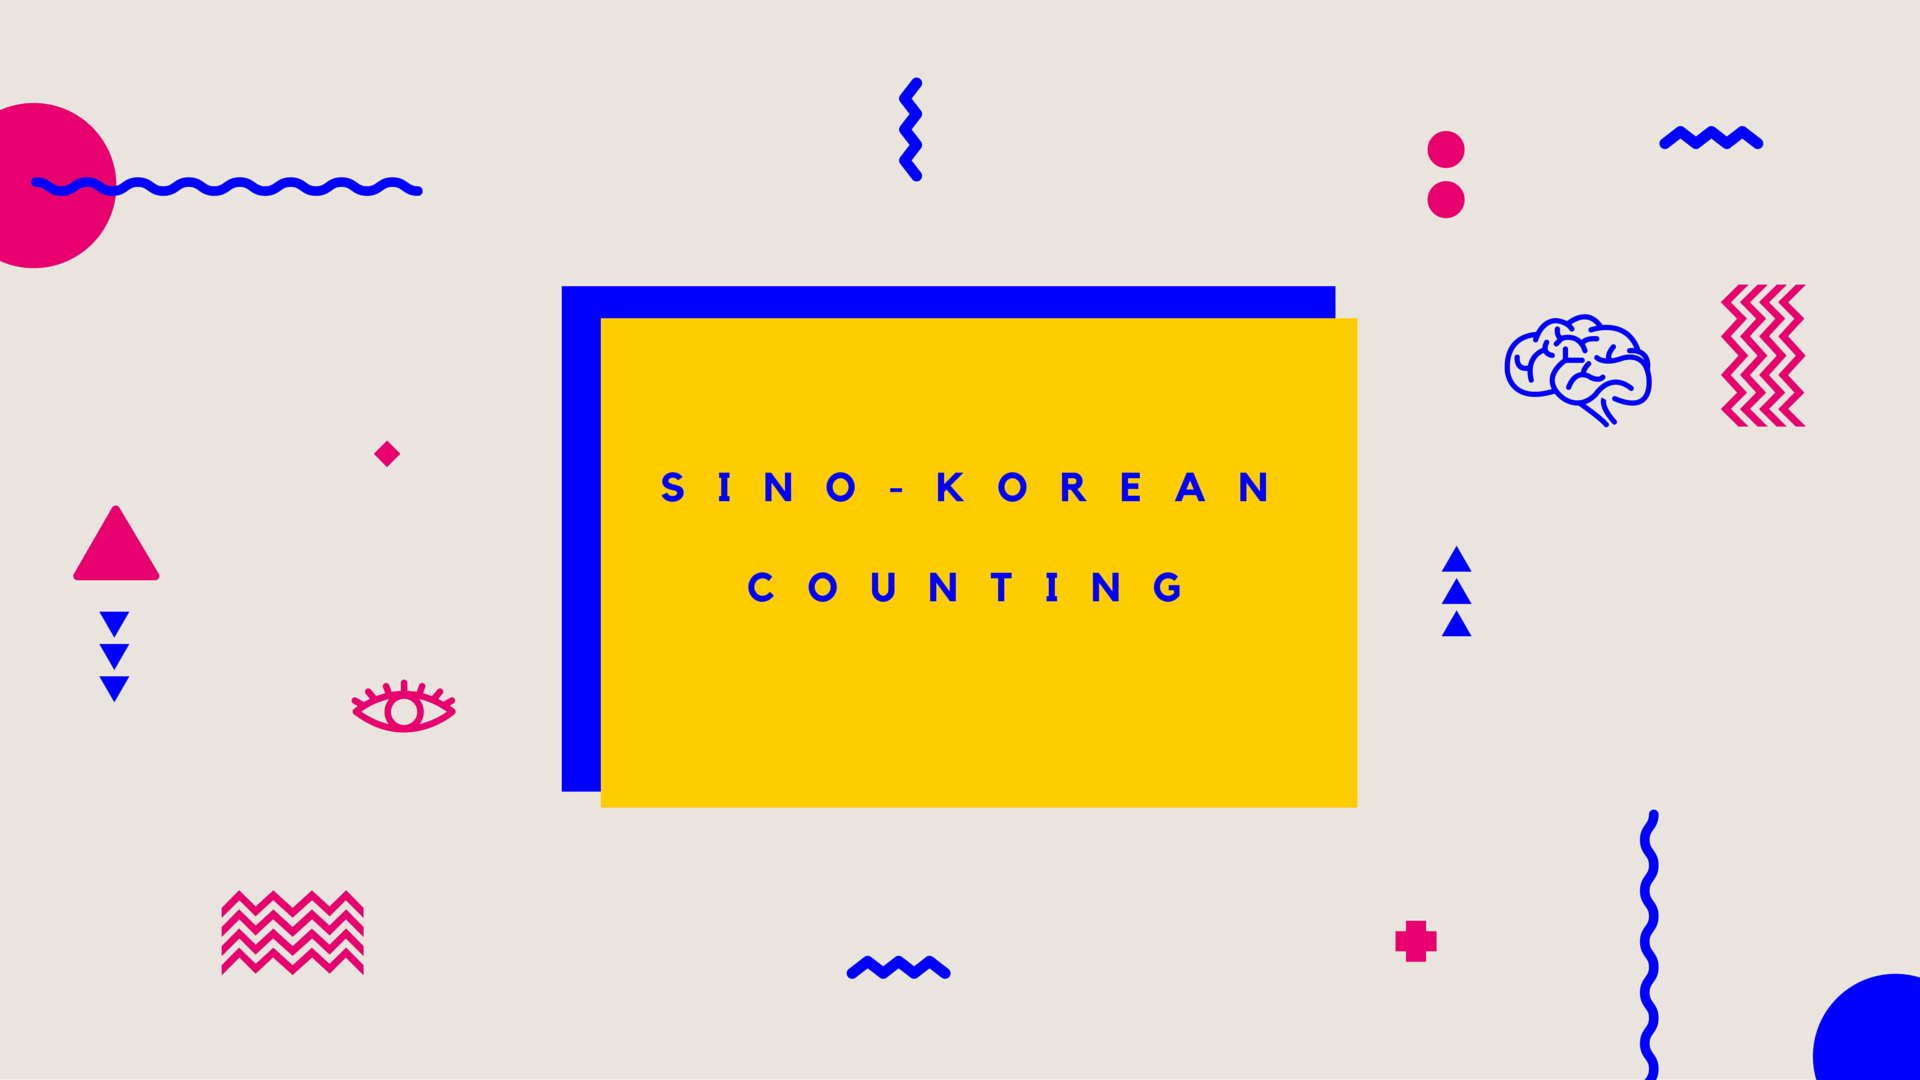 Counting in Korean - Sino-Korean Numbers